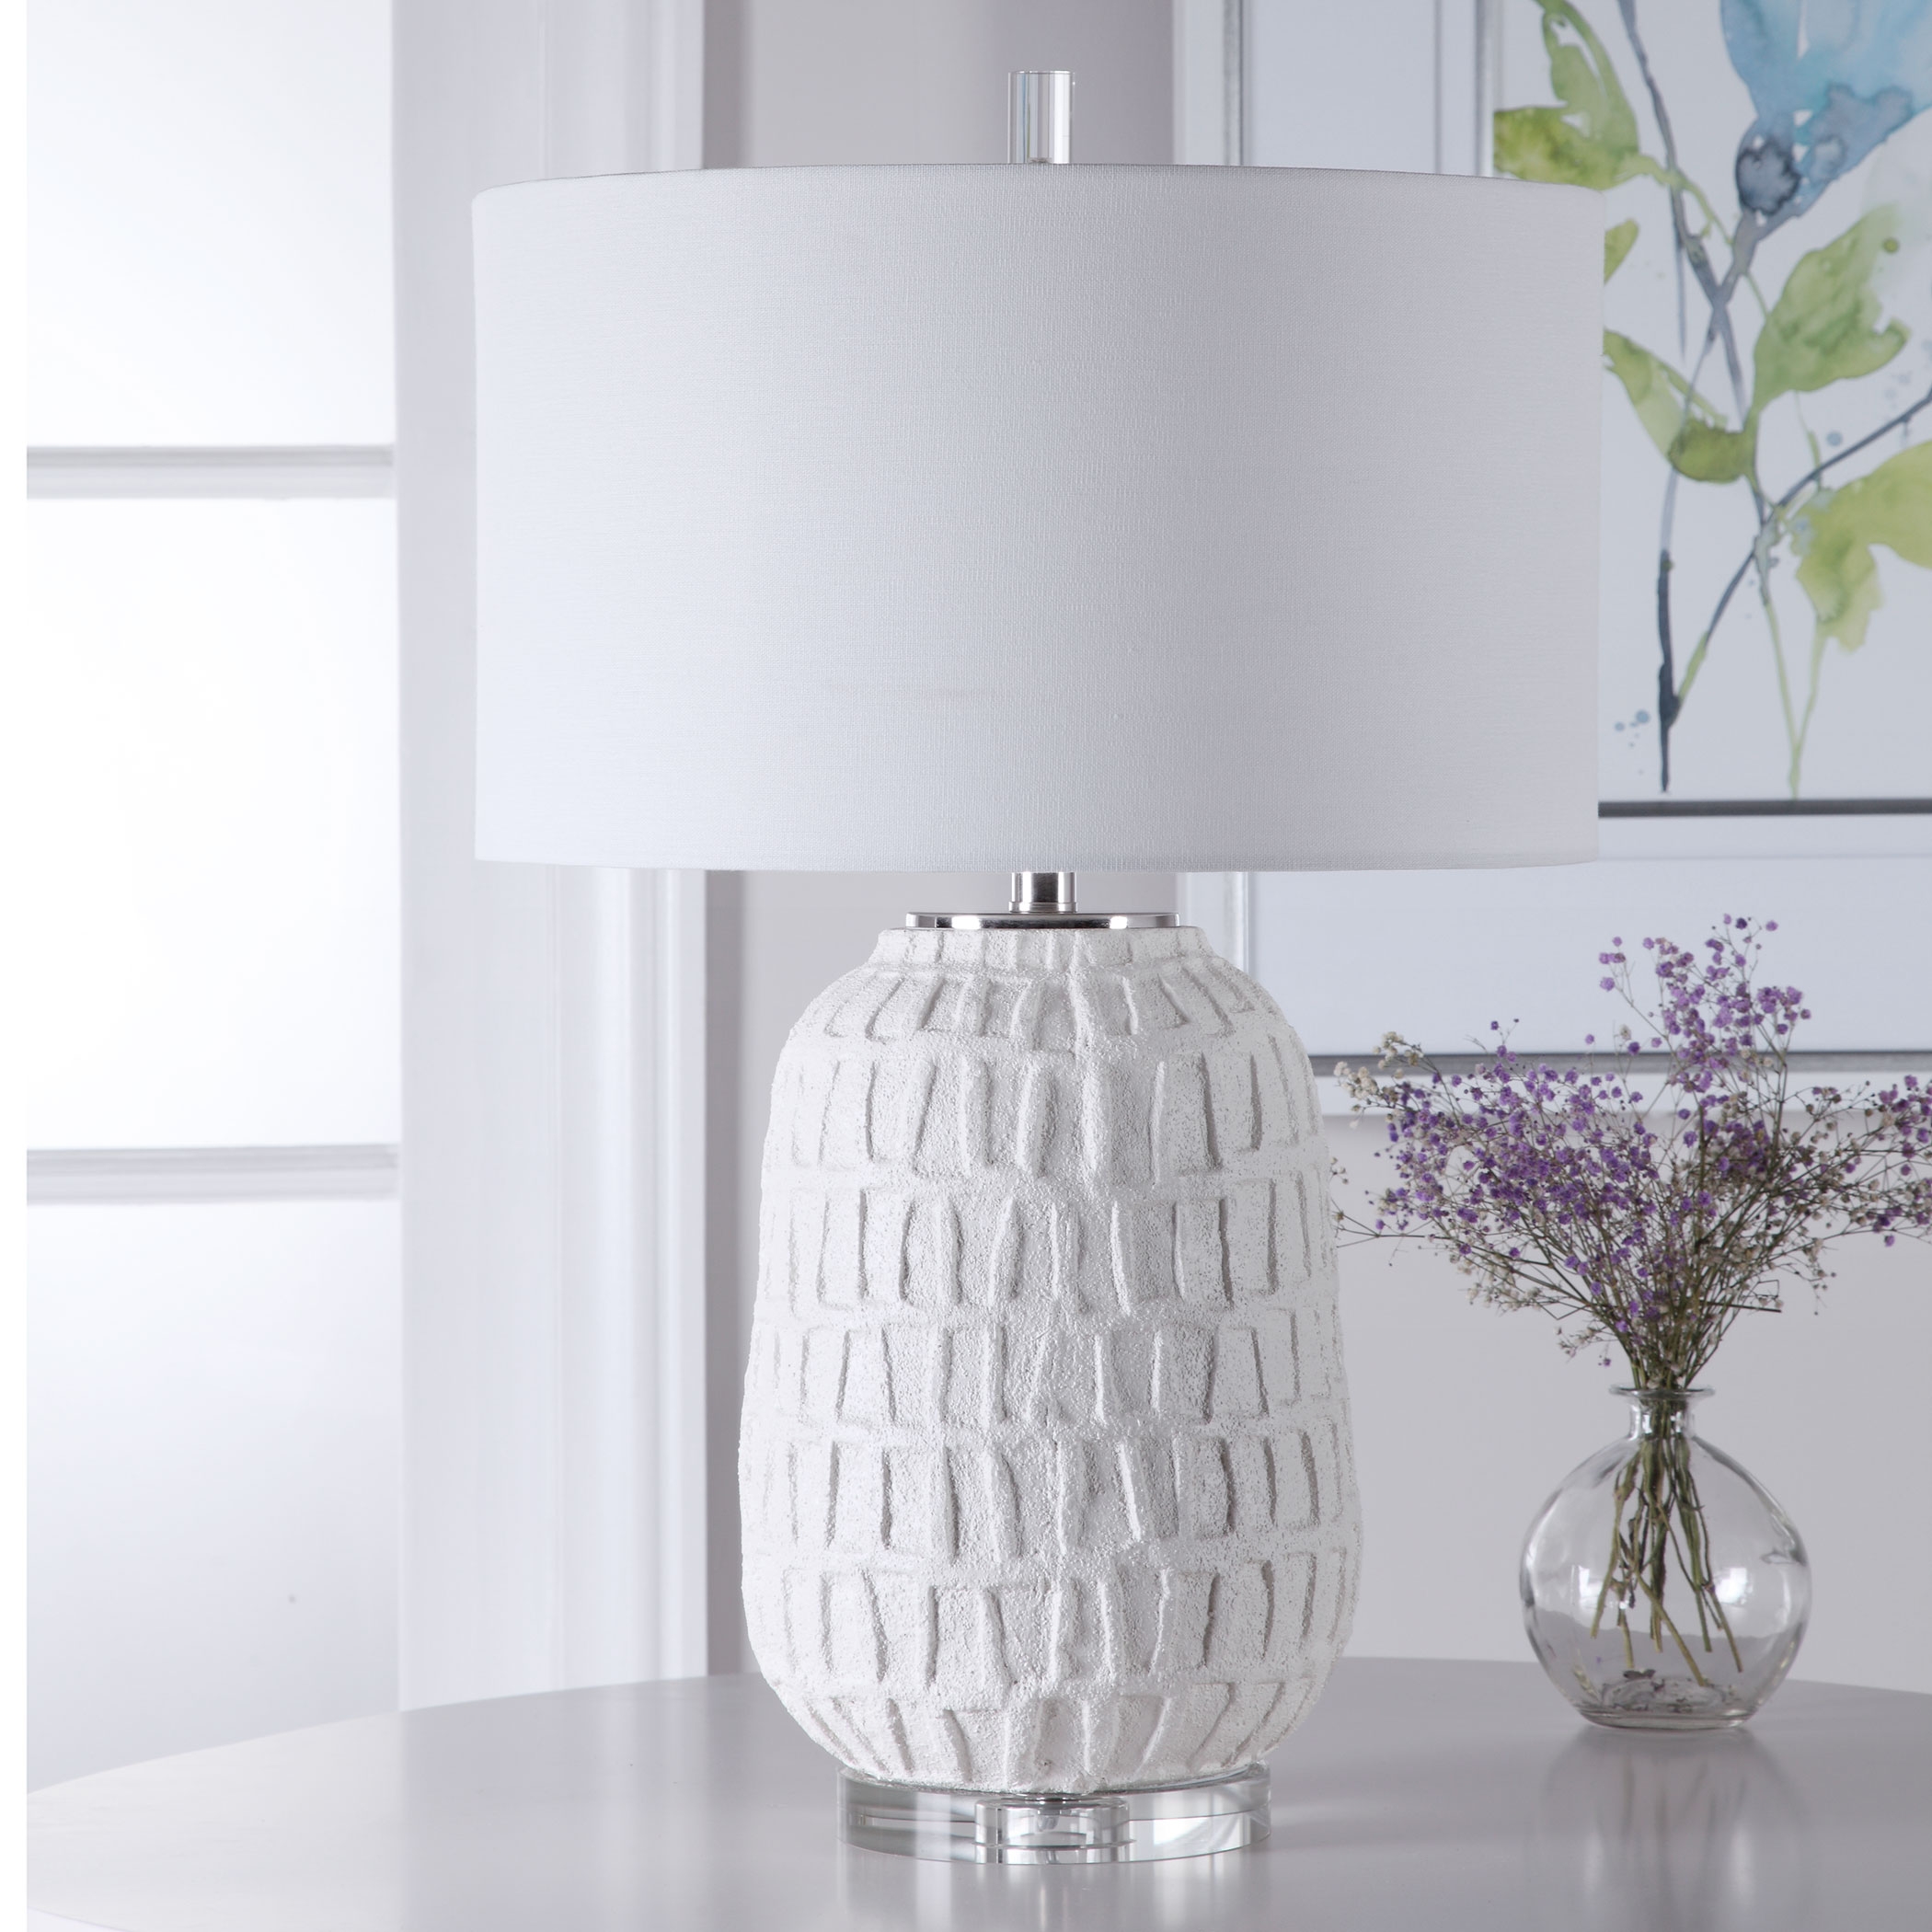 Caelina Textured Table Lamp, White - Image 4